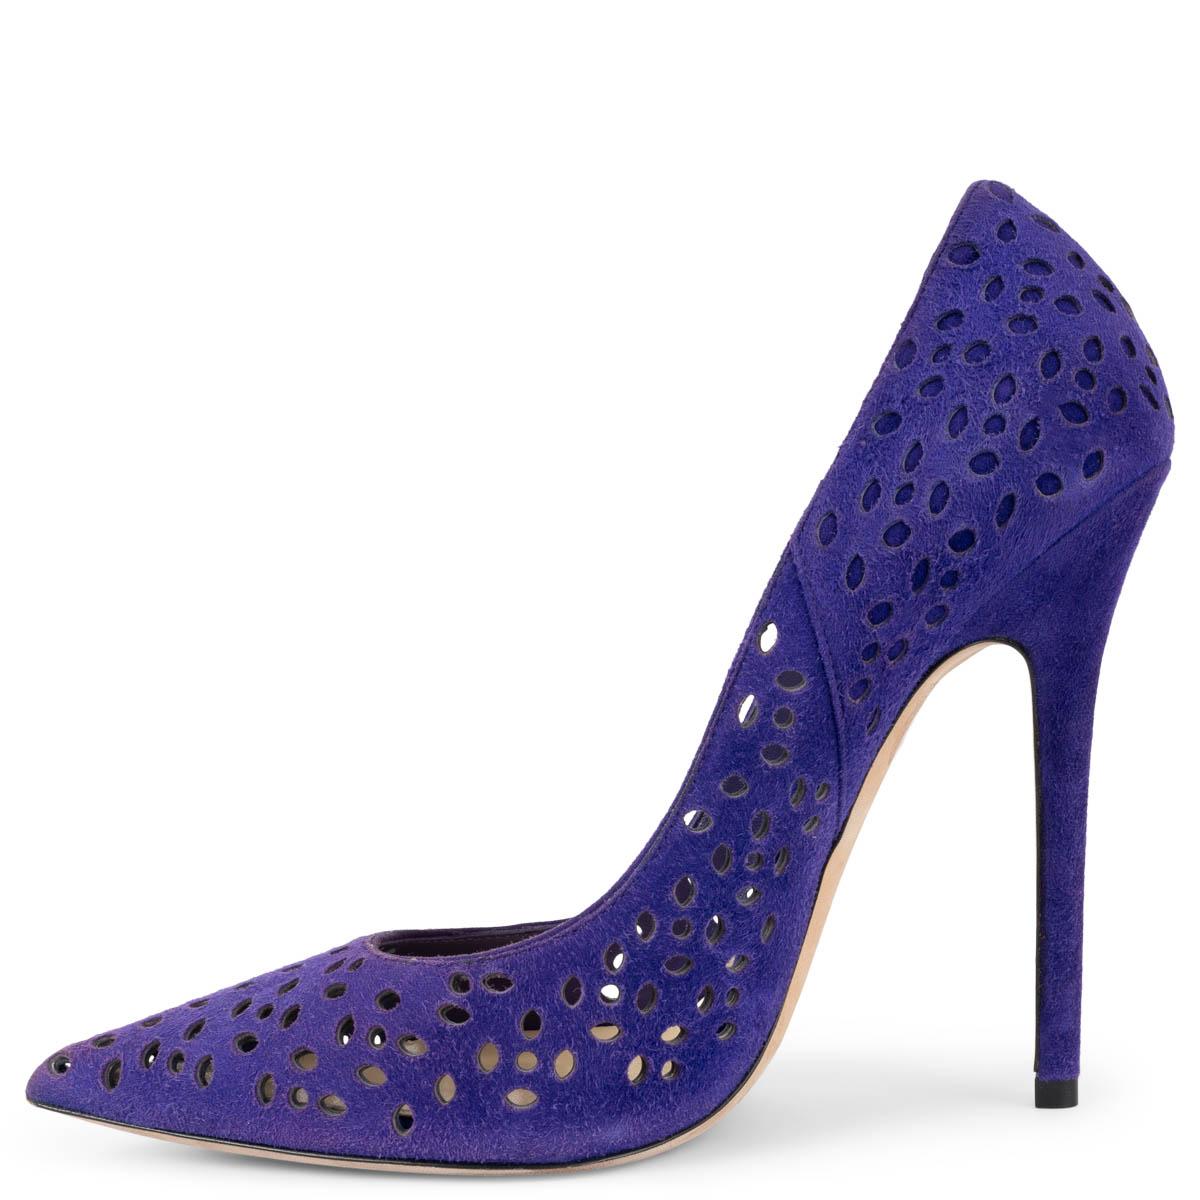 Violet Chaussures JIMMY CHOO PERFORATED ANOUK en daim violet 37,5 en vente